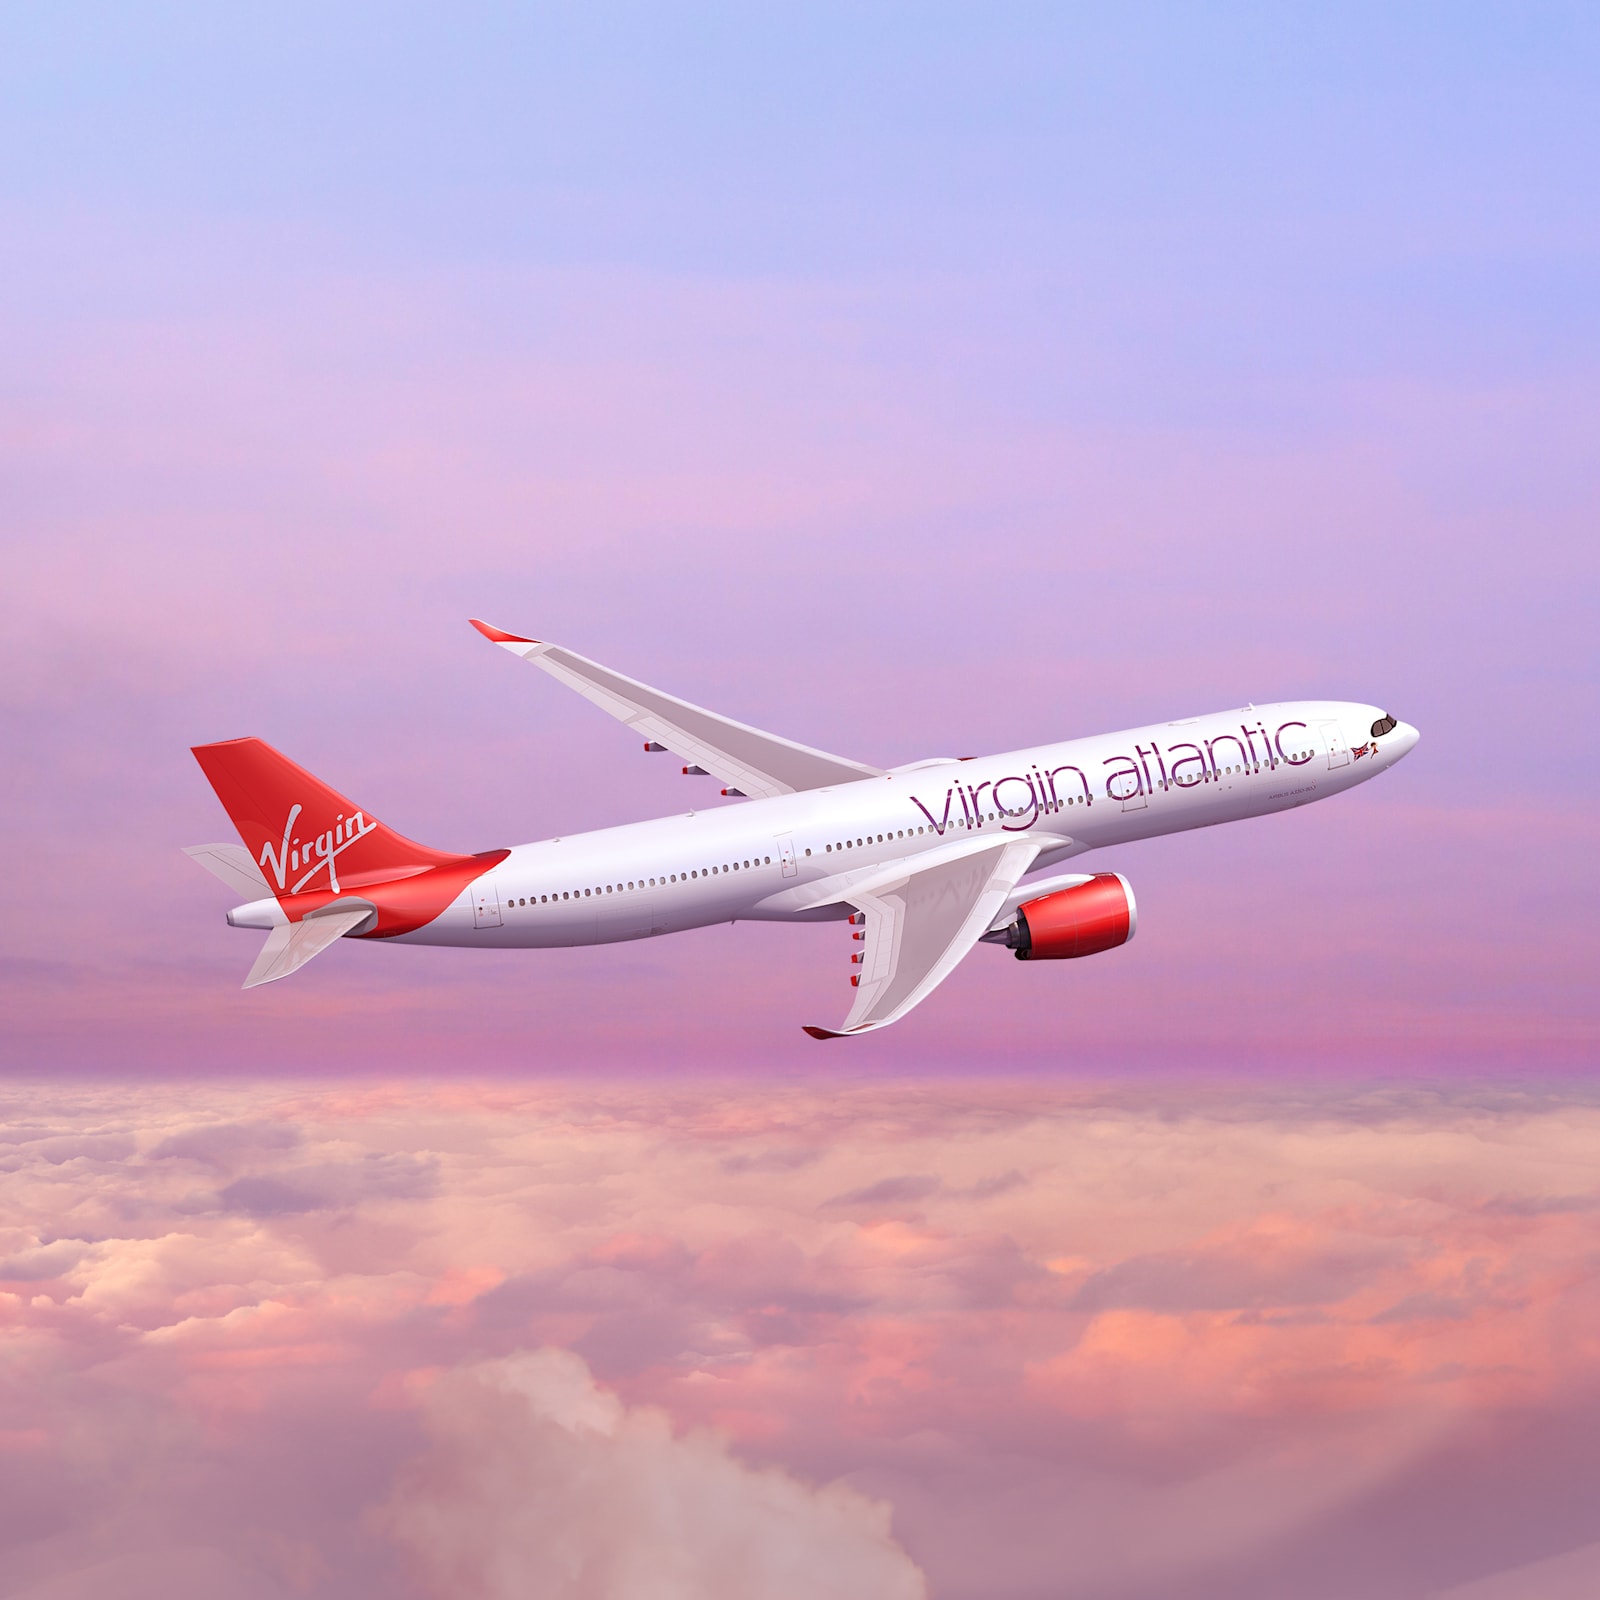 ANAC grants permission to Virgin Atlantic to fly in Brazil